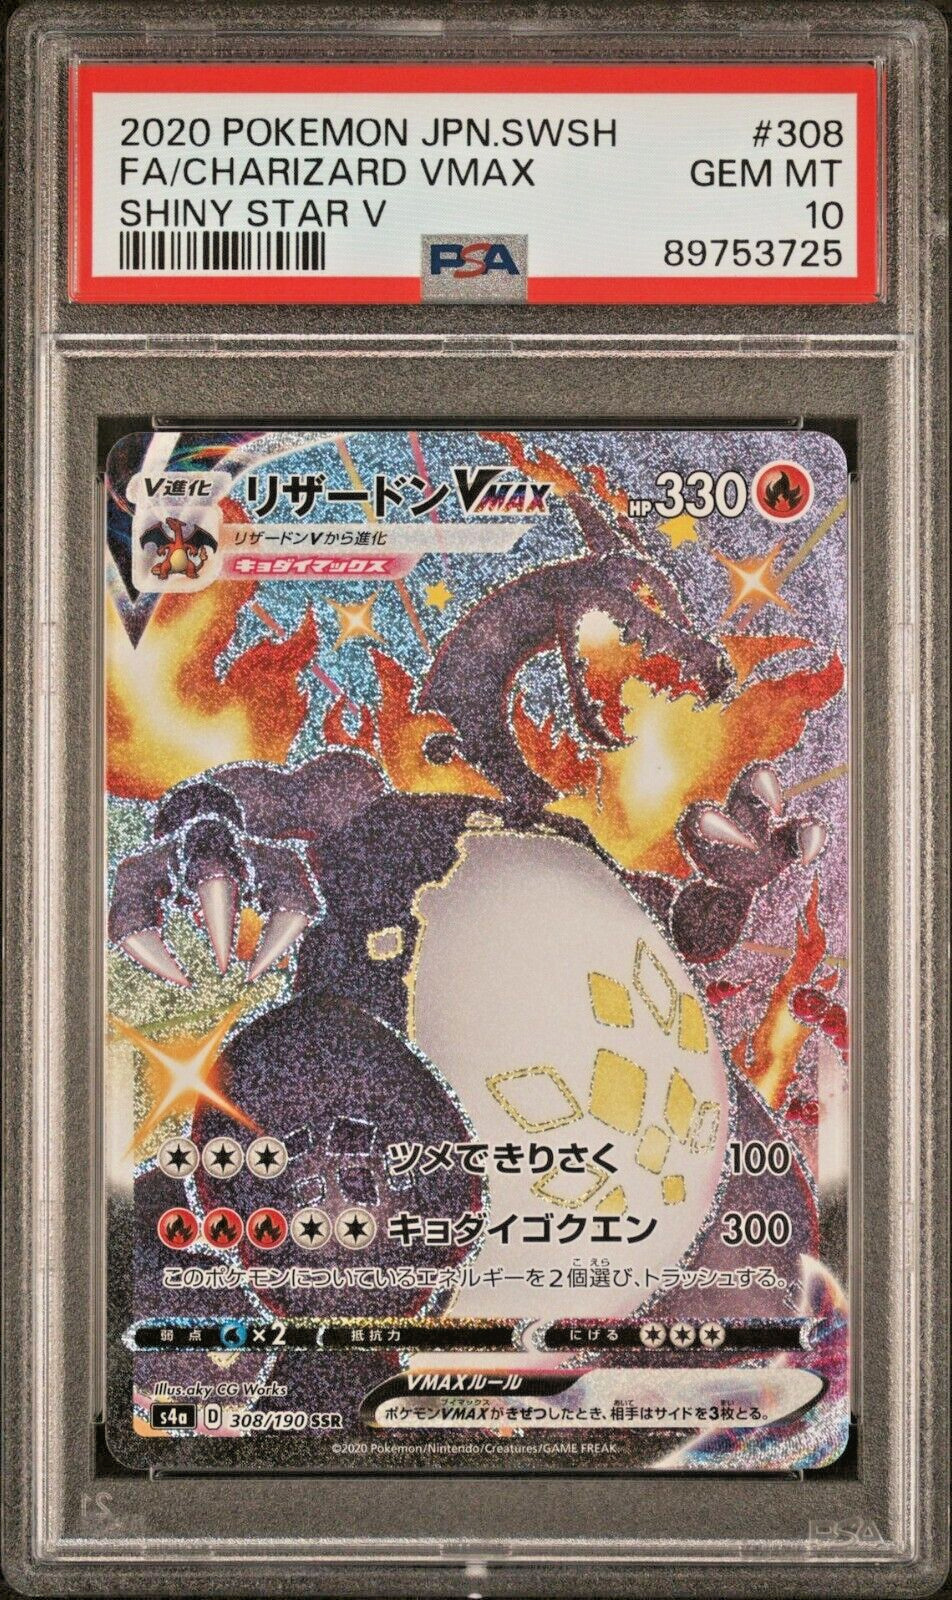 GEM MINT✨ 2020 Pokémon Japanese Shiny Star V Charizard VMAX 308 FA SSR PSA 10